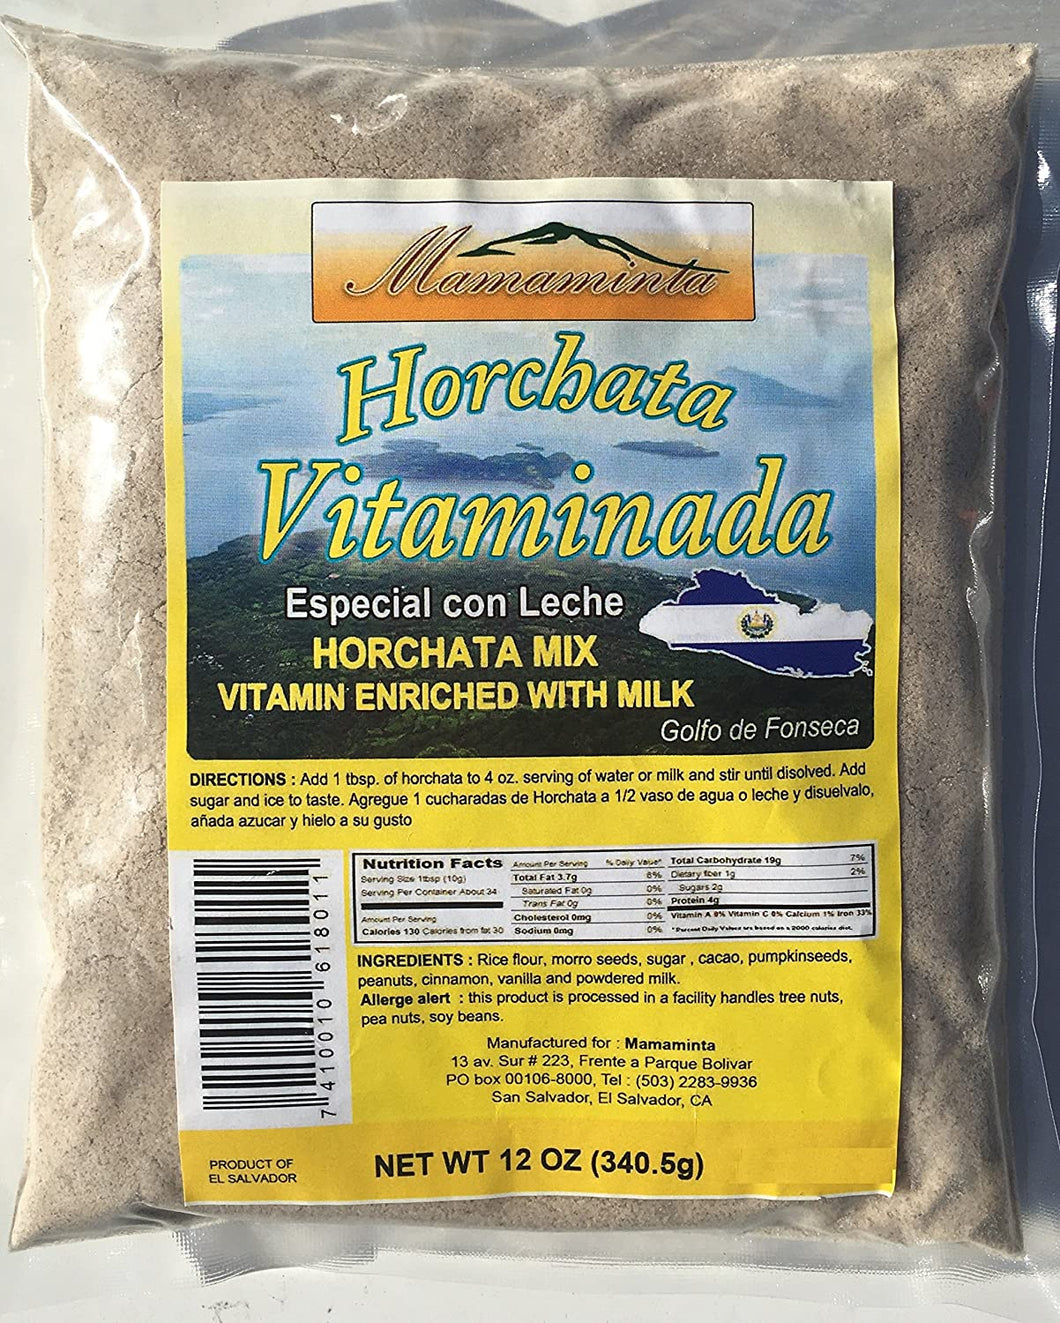 Horchata Vitaminada Especial Con Leche Horchata Mix Vitamin Enriched With Milk Product Of El Salvador 12oz